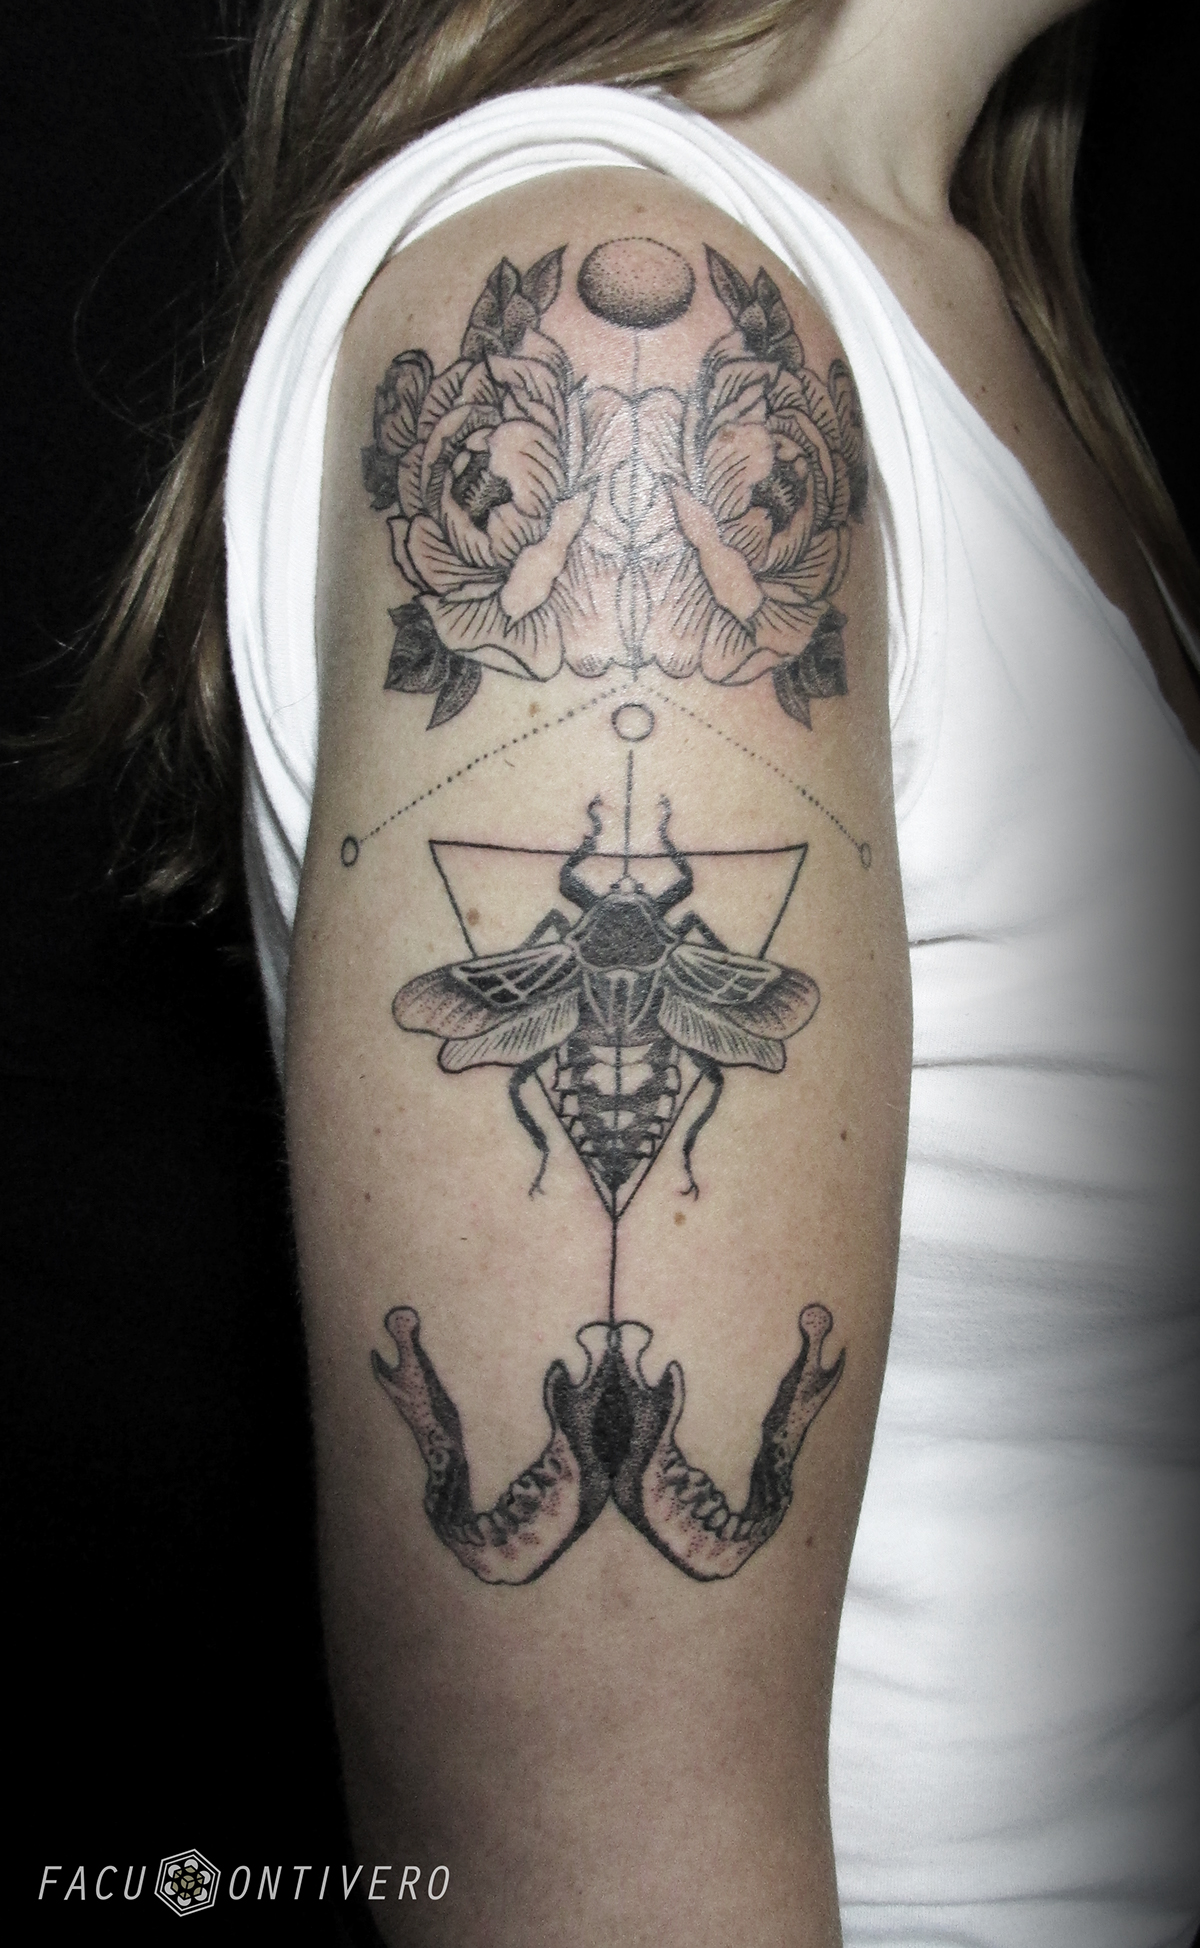 tattoo dotwork ink linework puntillismo engrave geometry botanical tatuaje minimalist facu ontivero Mandala animal flower moonasi